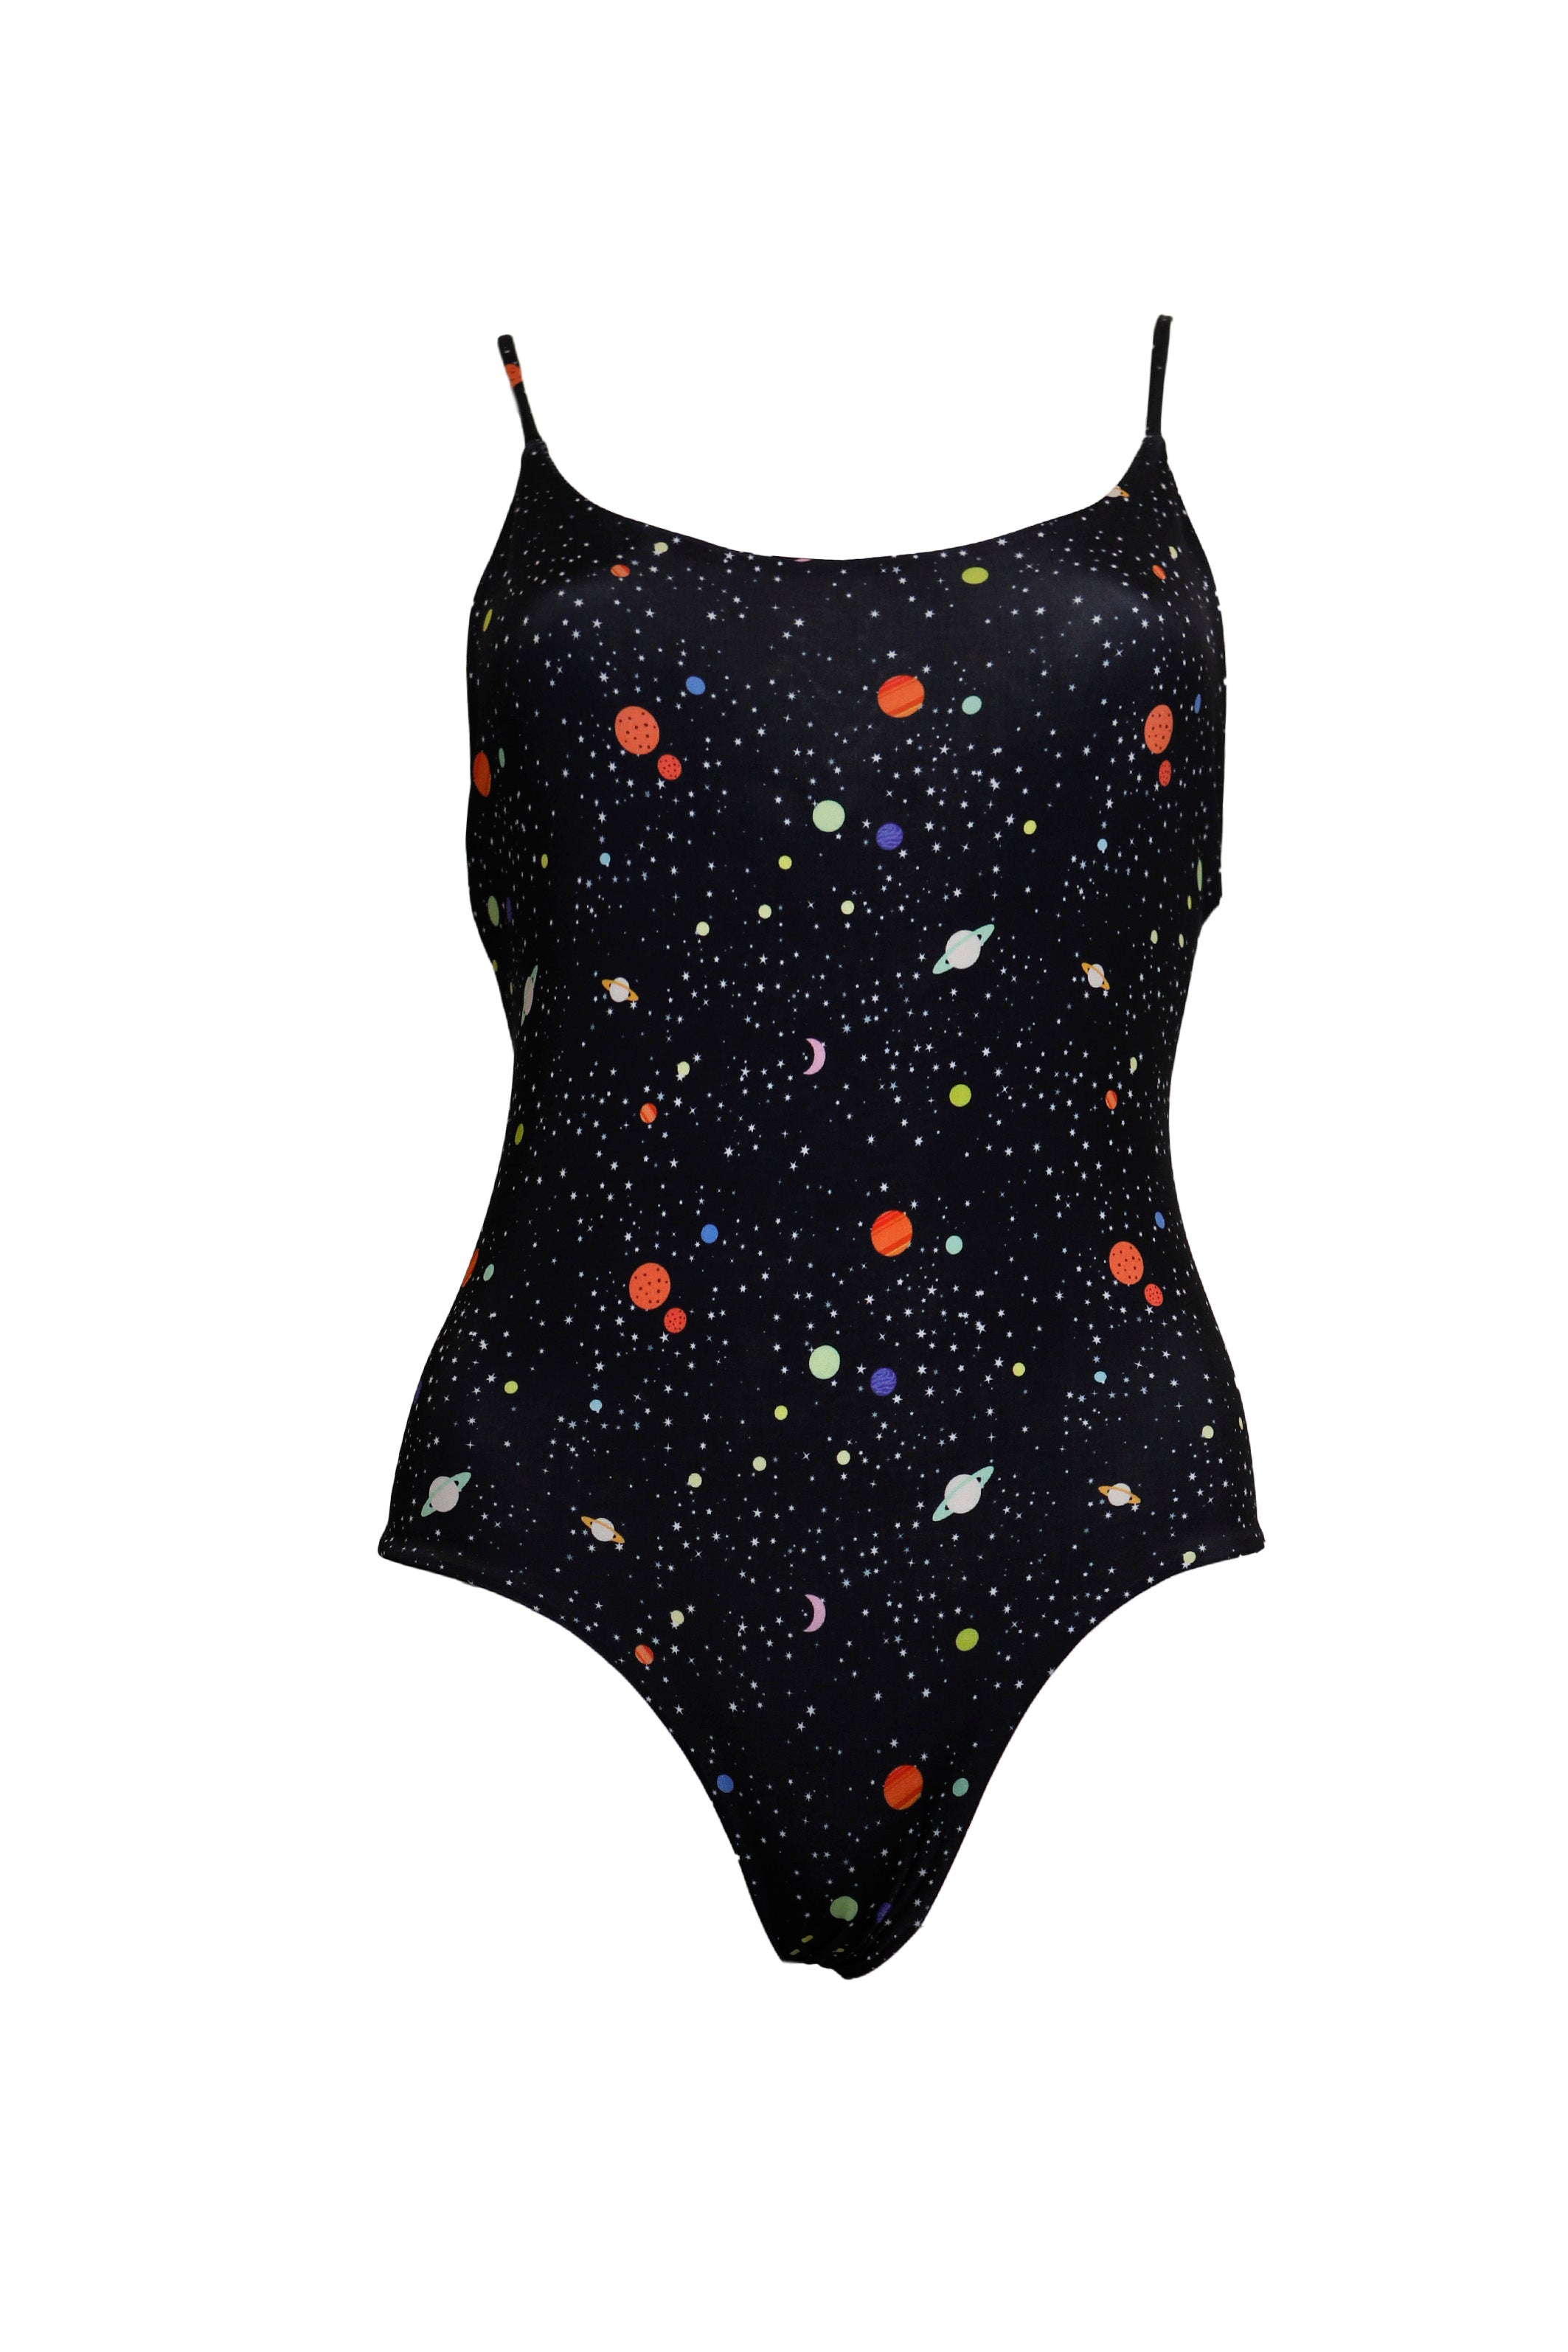 FEDERICA - one-piece swimsuit in Spazio print lycra